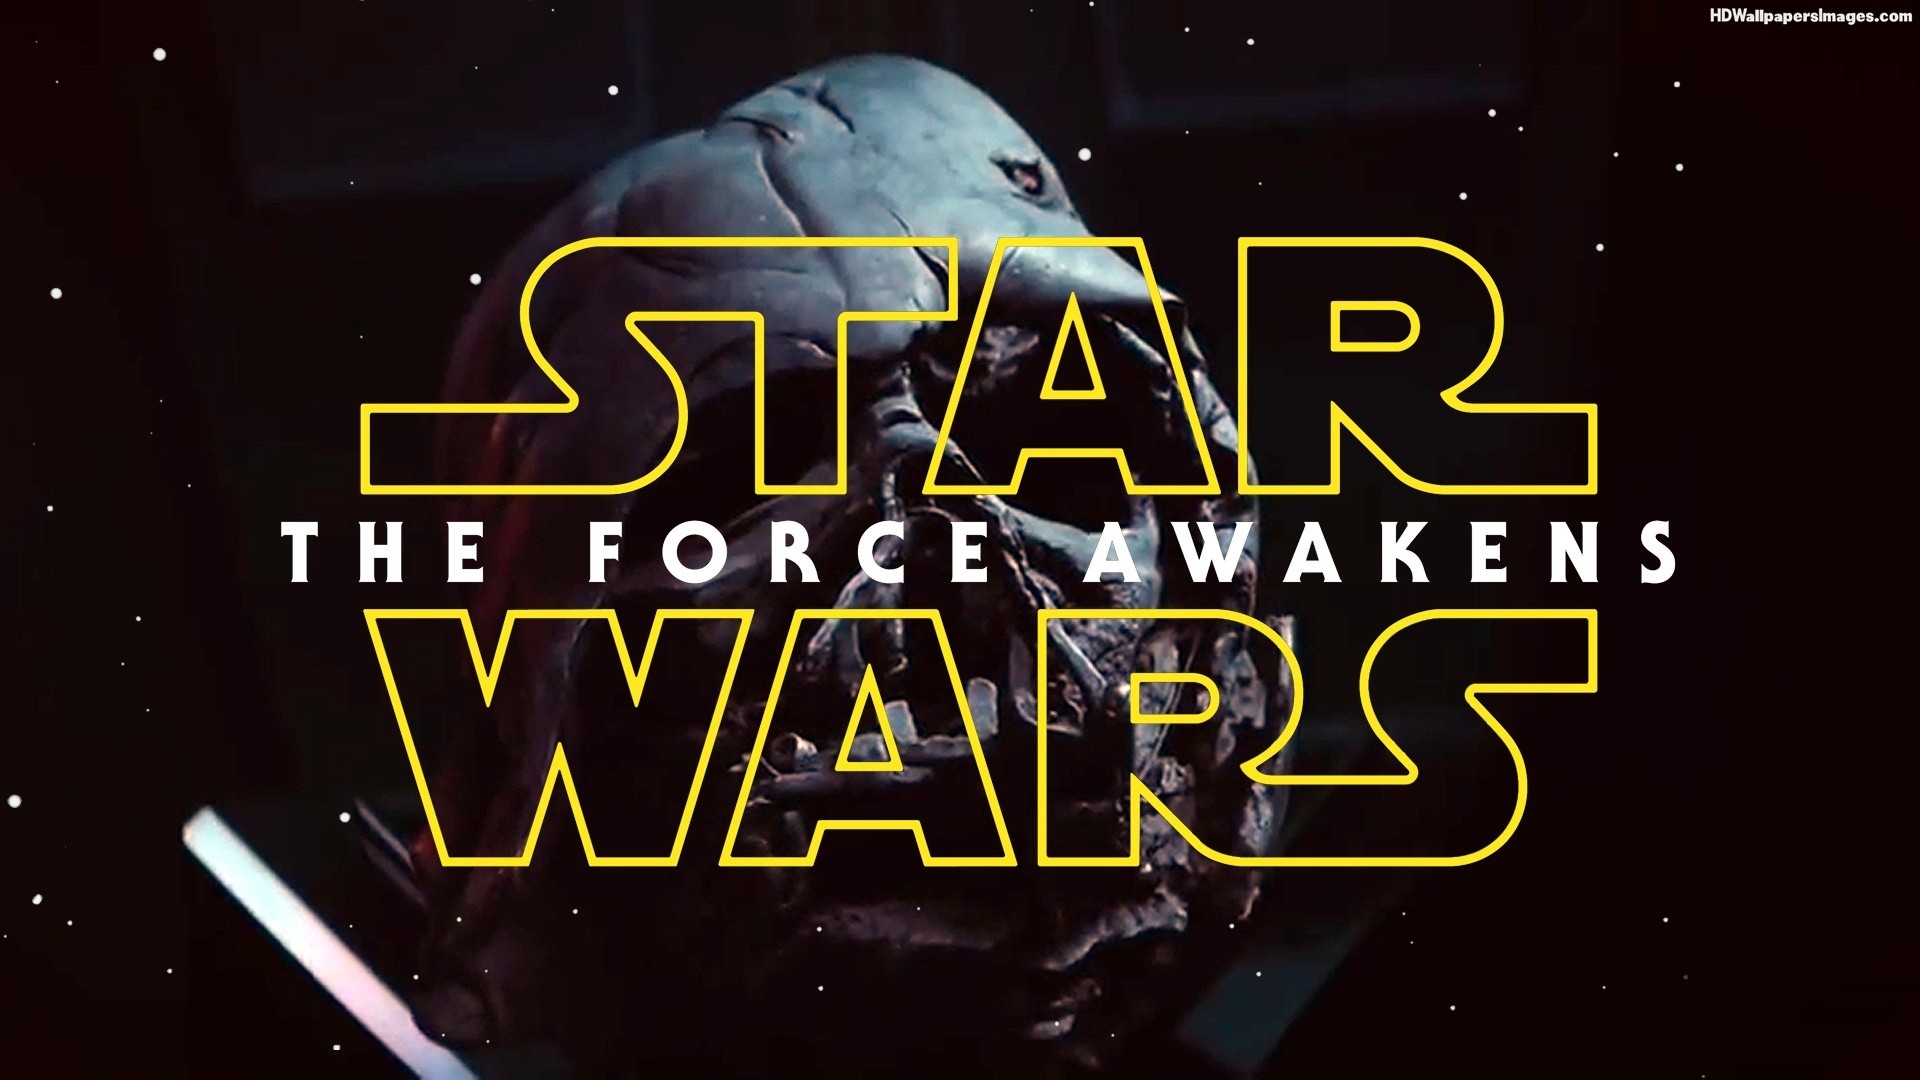 Star Wars The Force Awakens Marketing